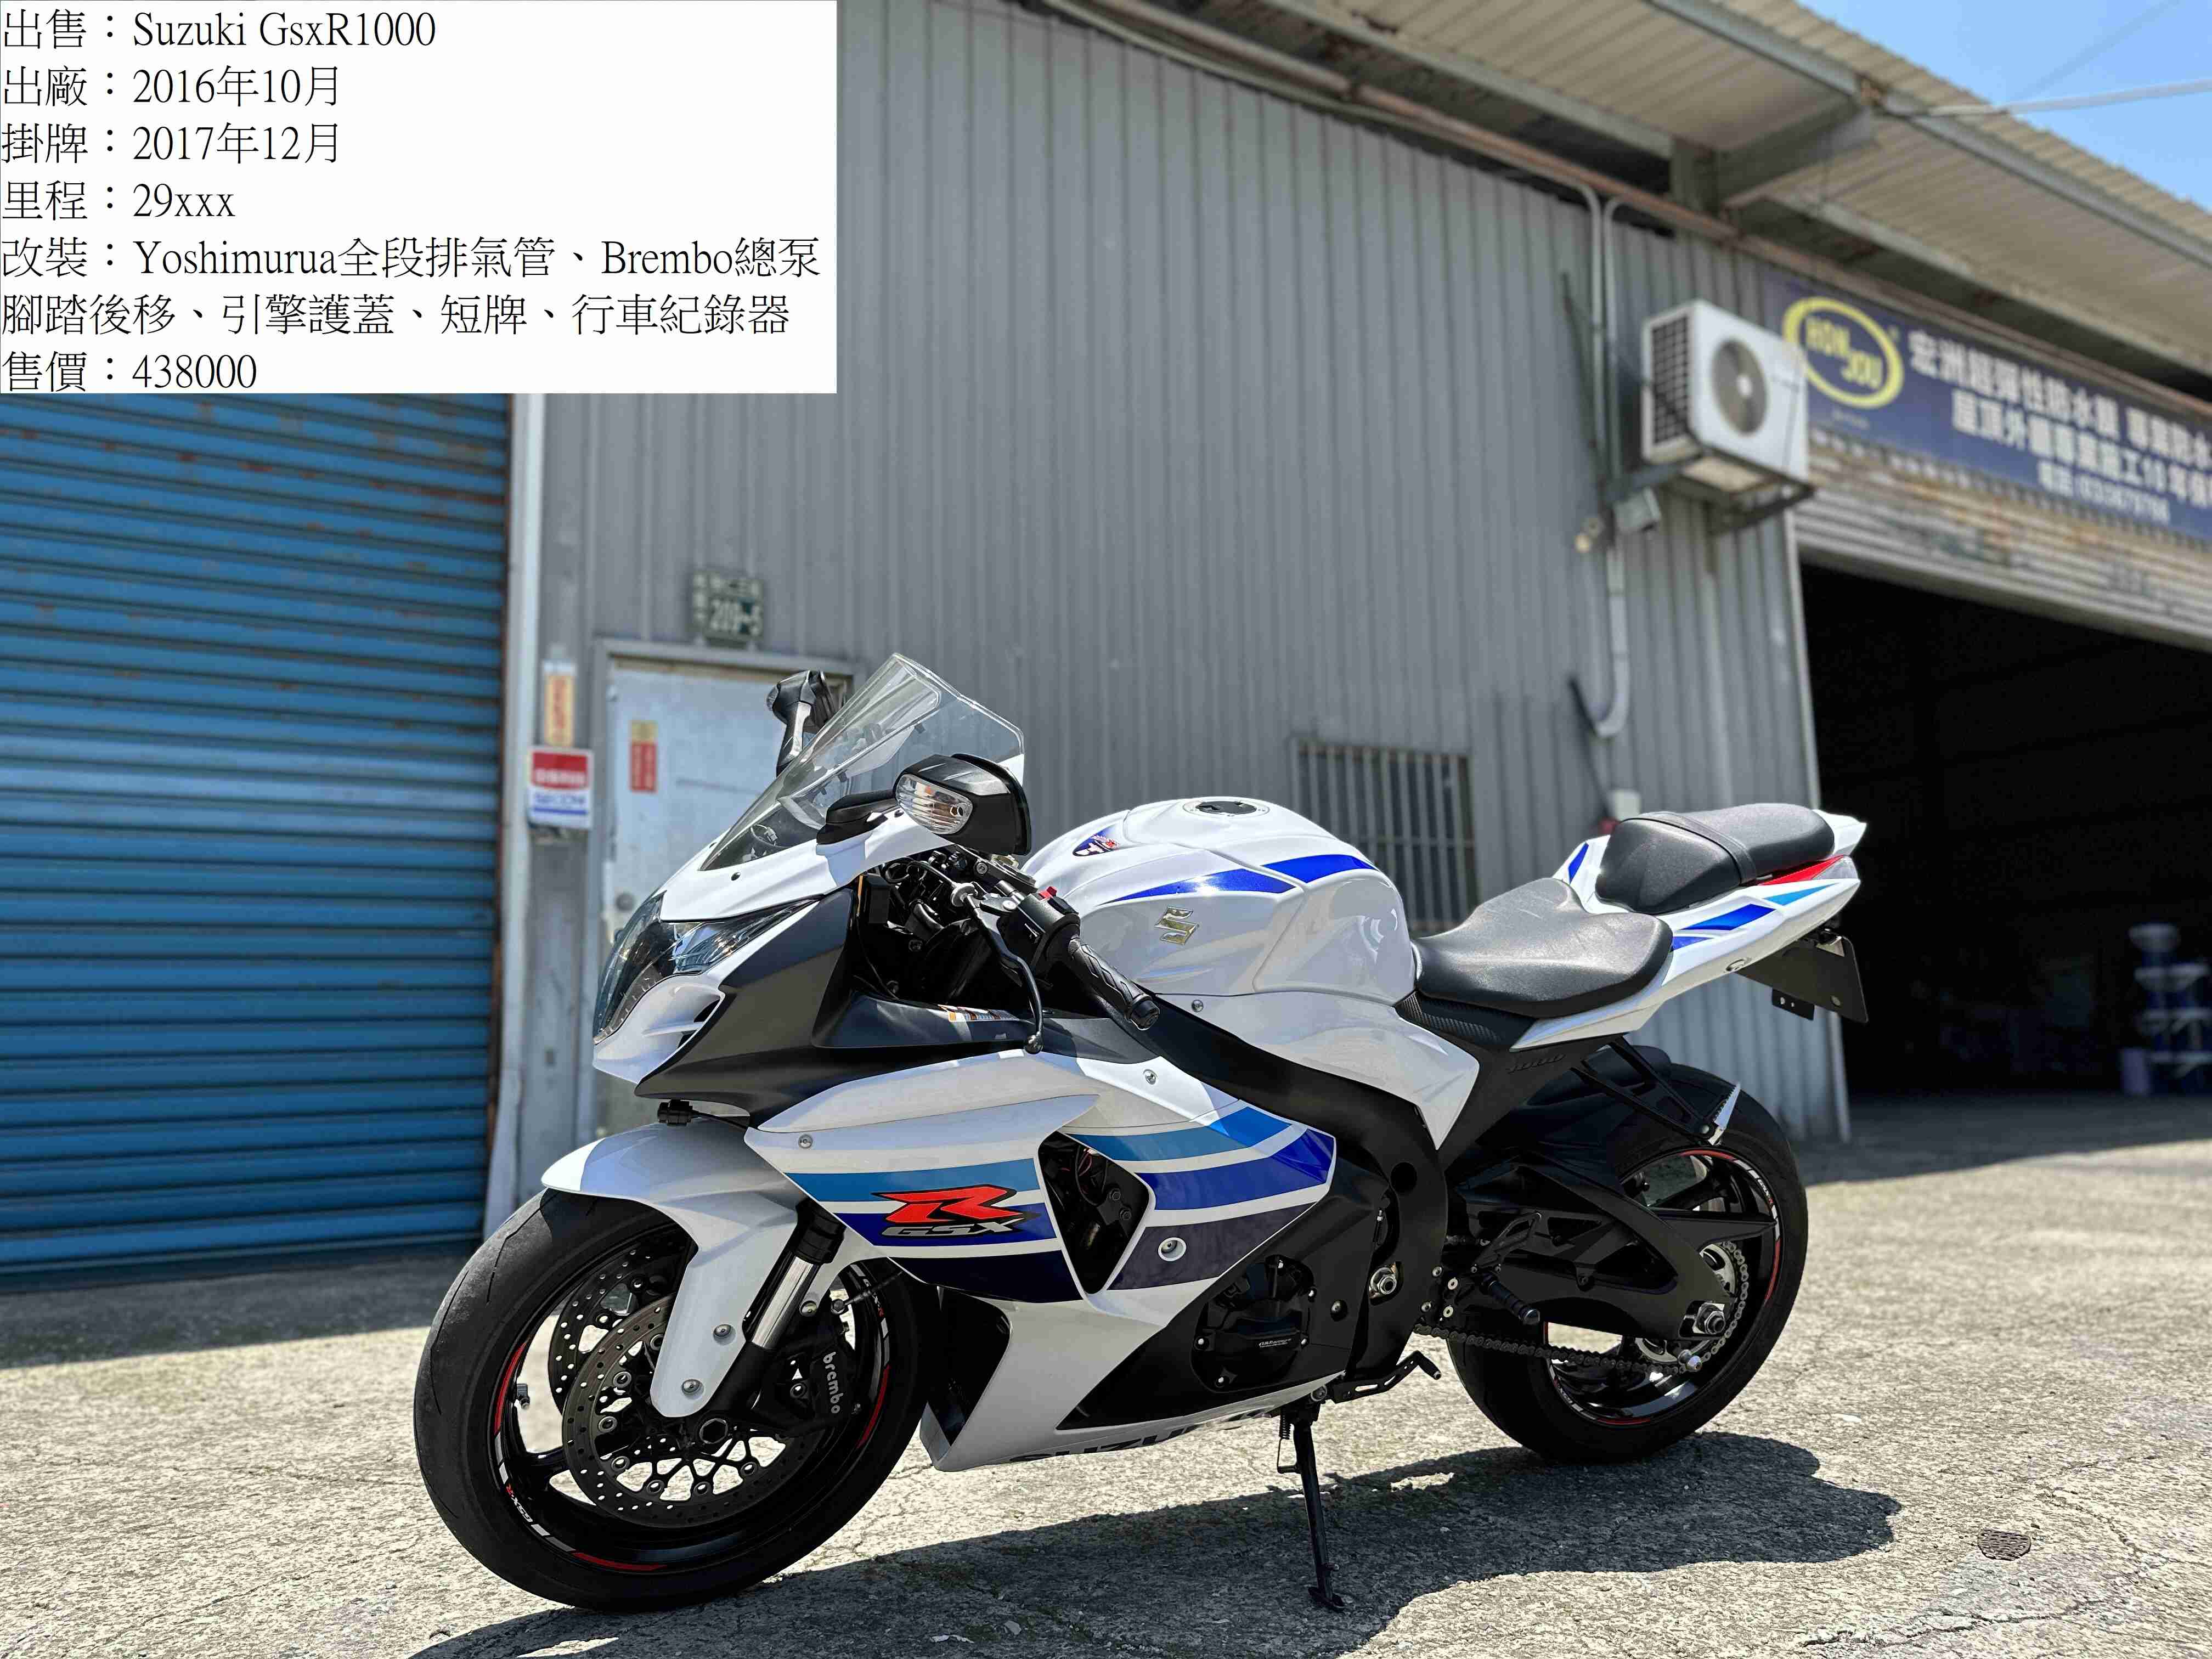 【湯姆重機】SUZUKI GSX-R1000 - 「Webike-摩托車市」 湯姆重機 2016 Suzuki Gsx-R1000